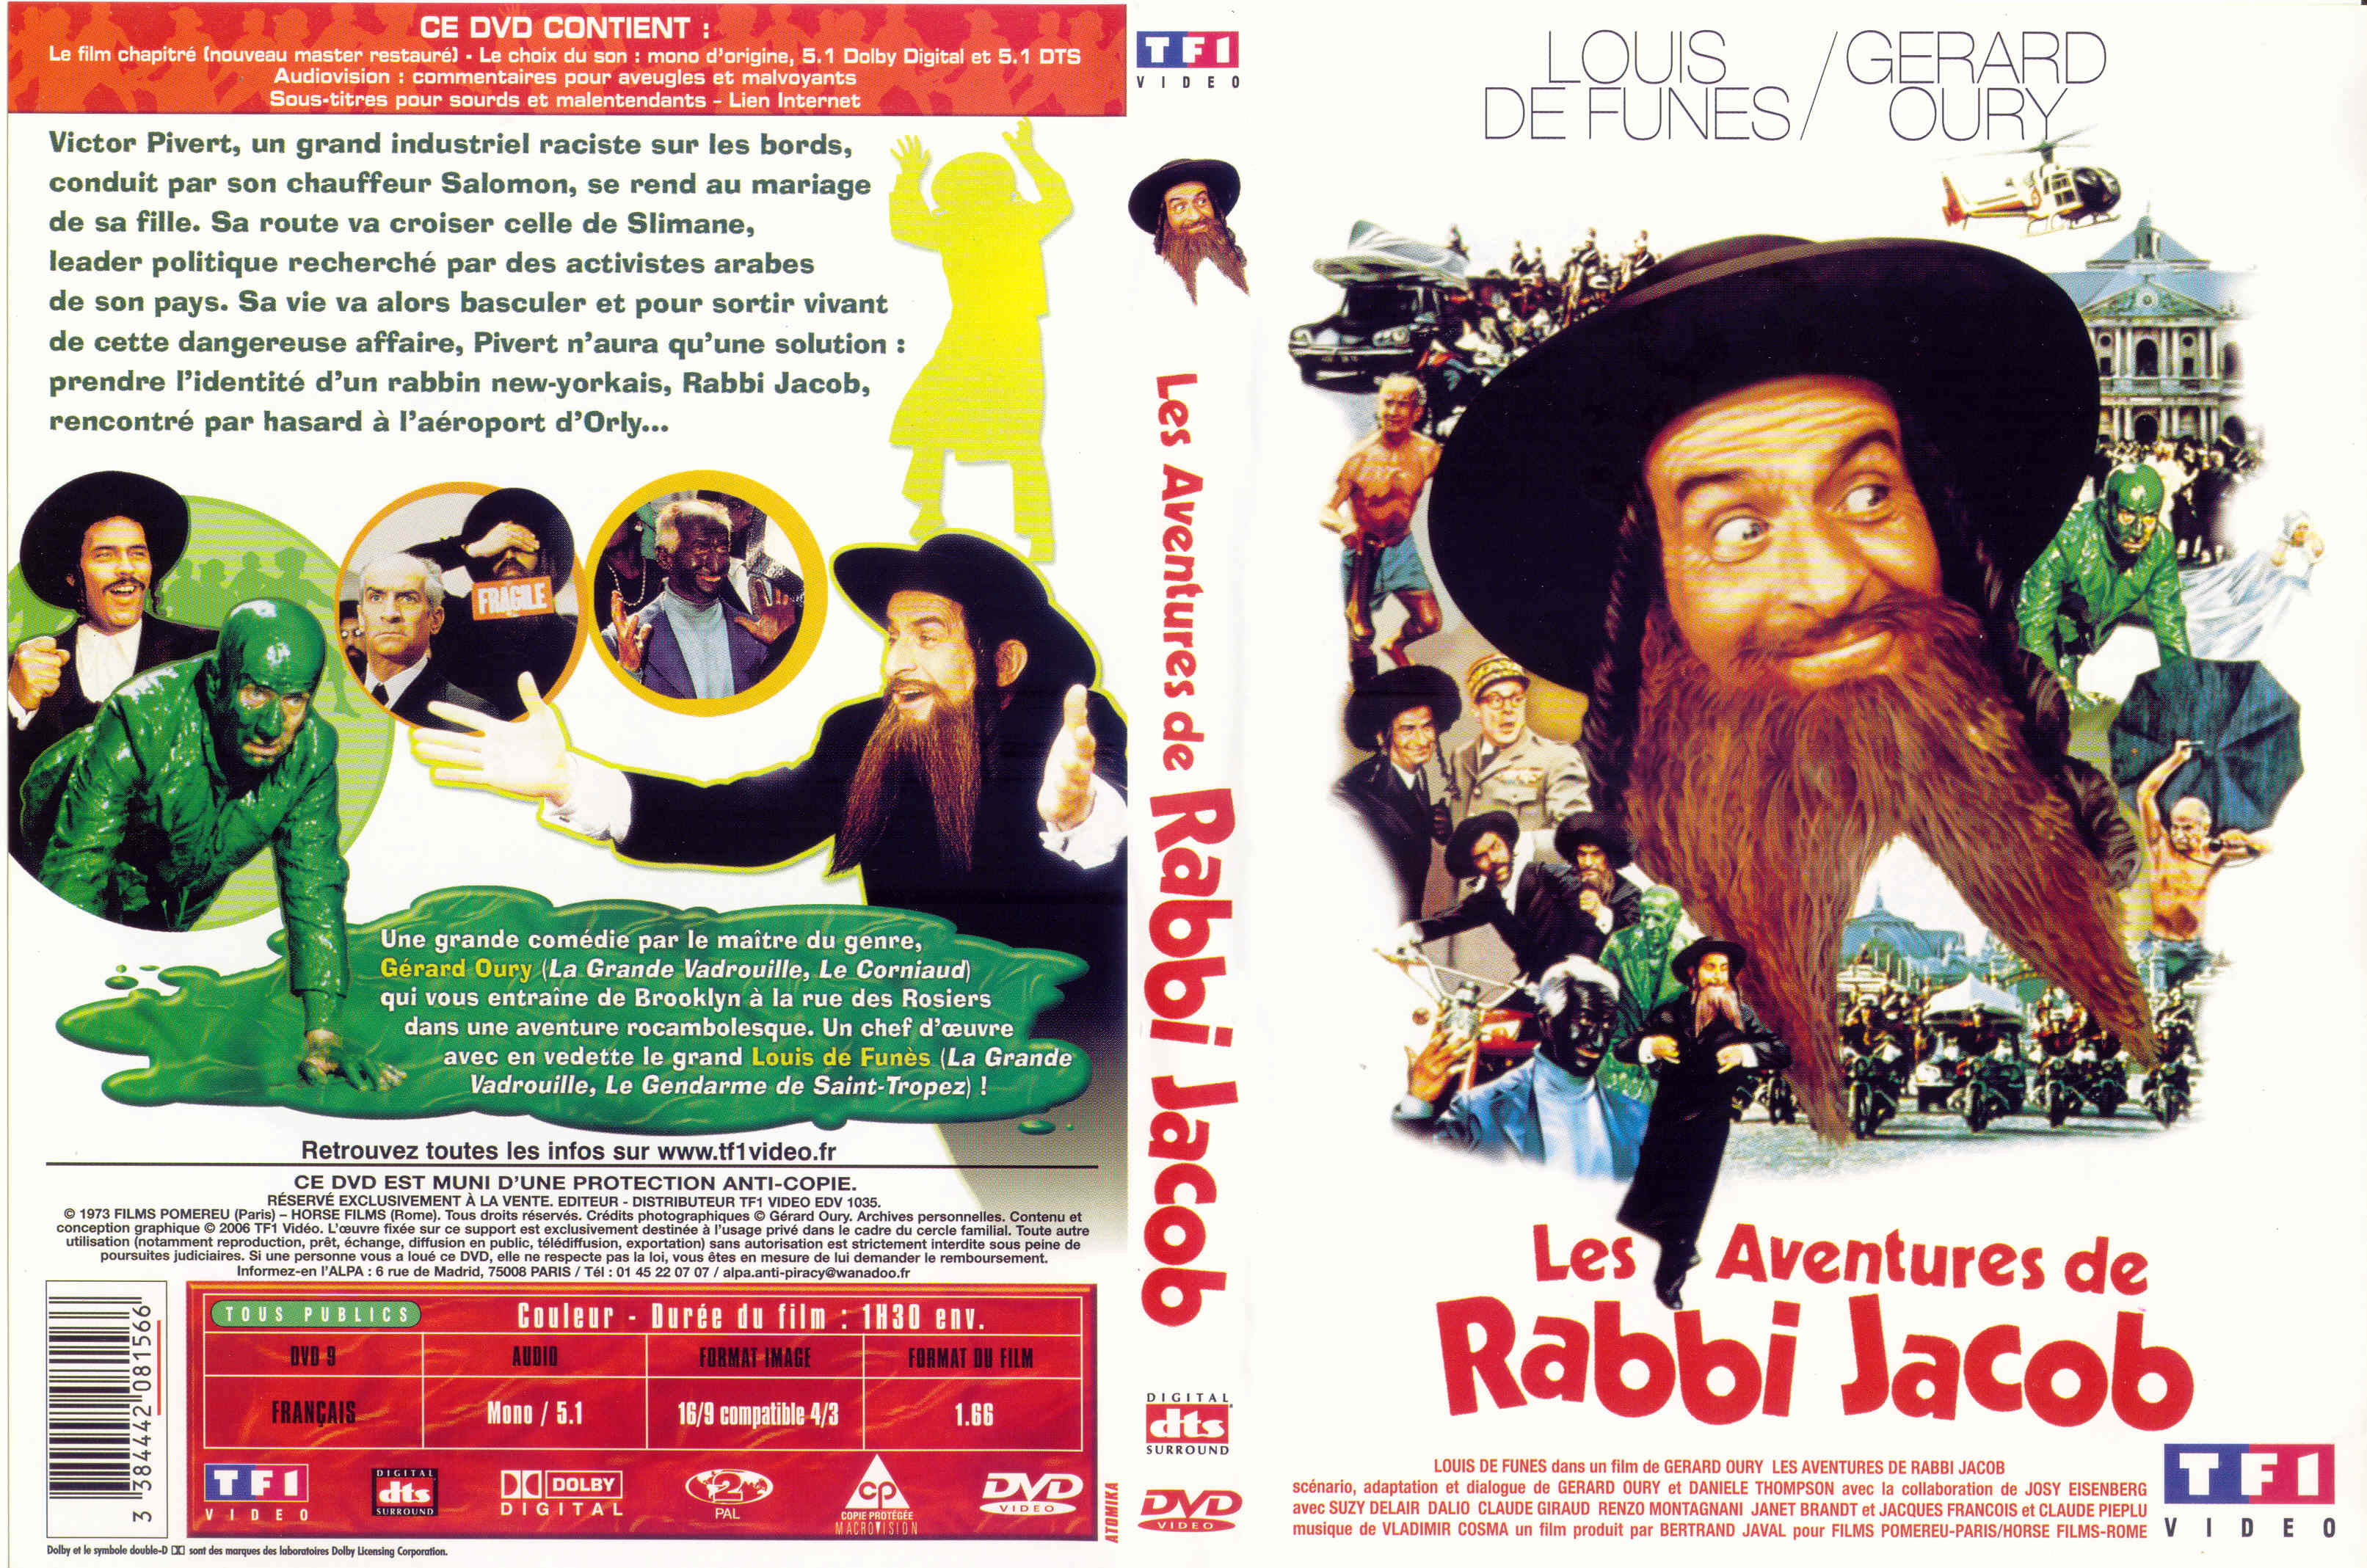 Jaquette DVD Les aventures de Rabbi Jacob v2